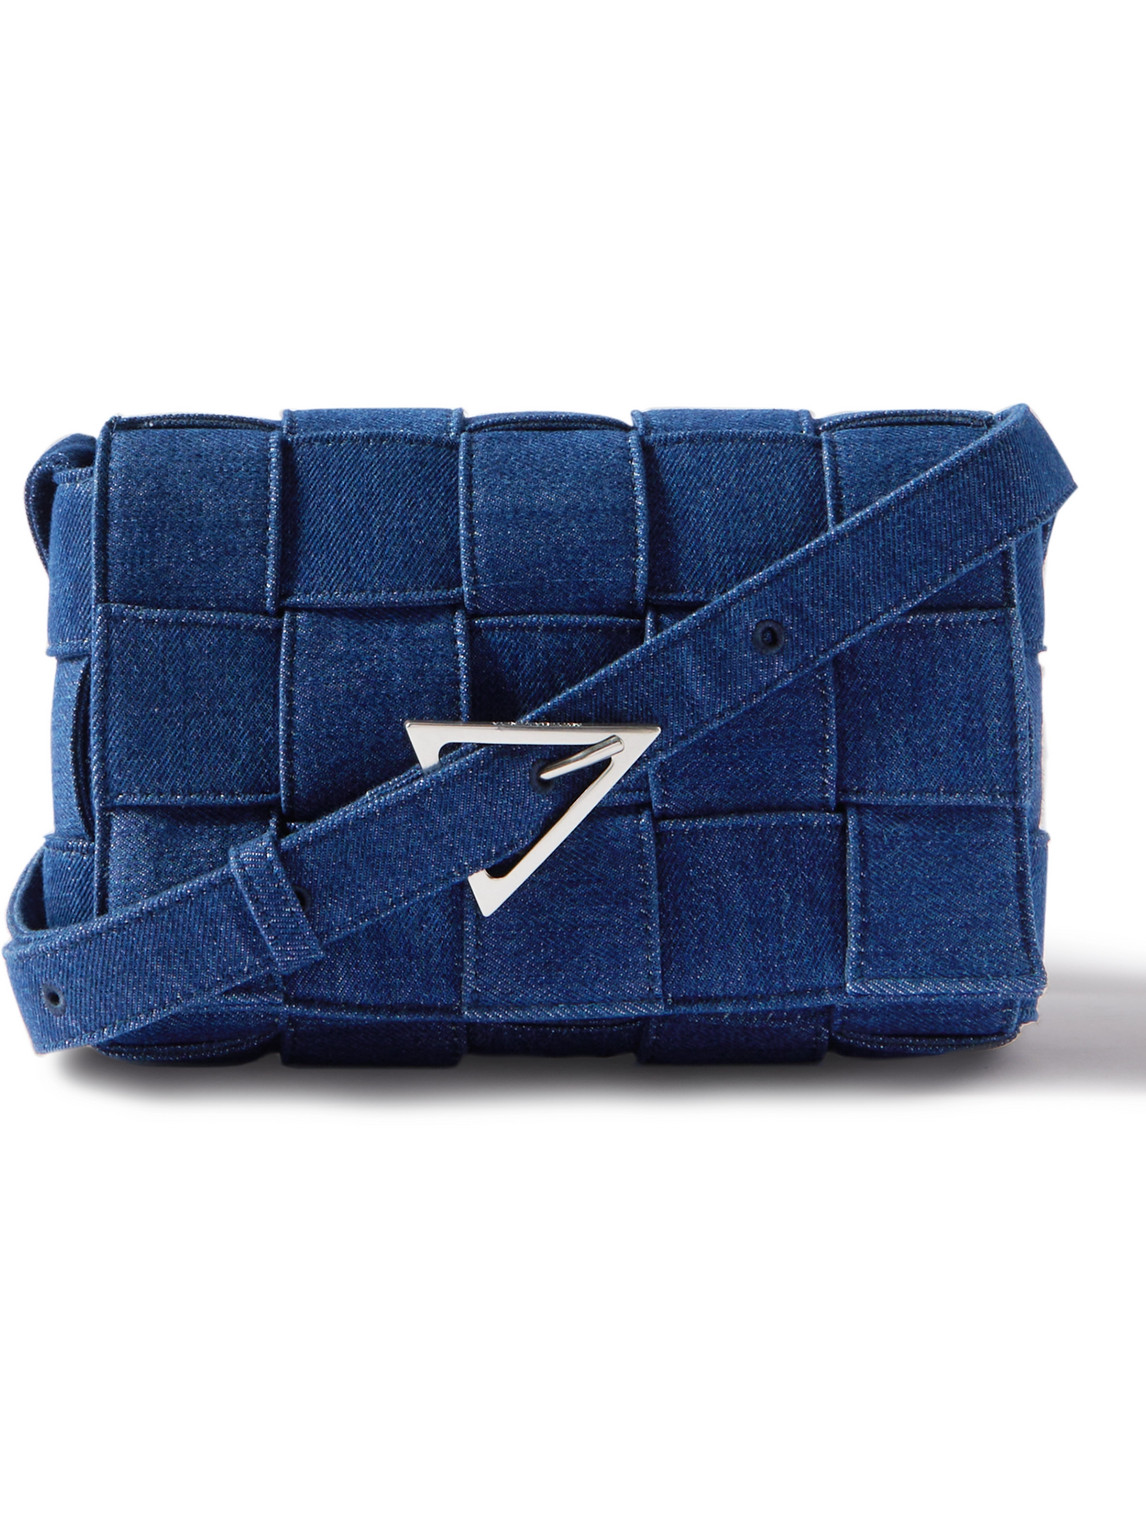 Bottega Veneta Intrecciato Denim Messenger Bag In Blue